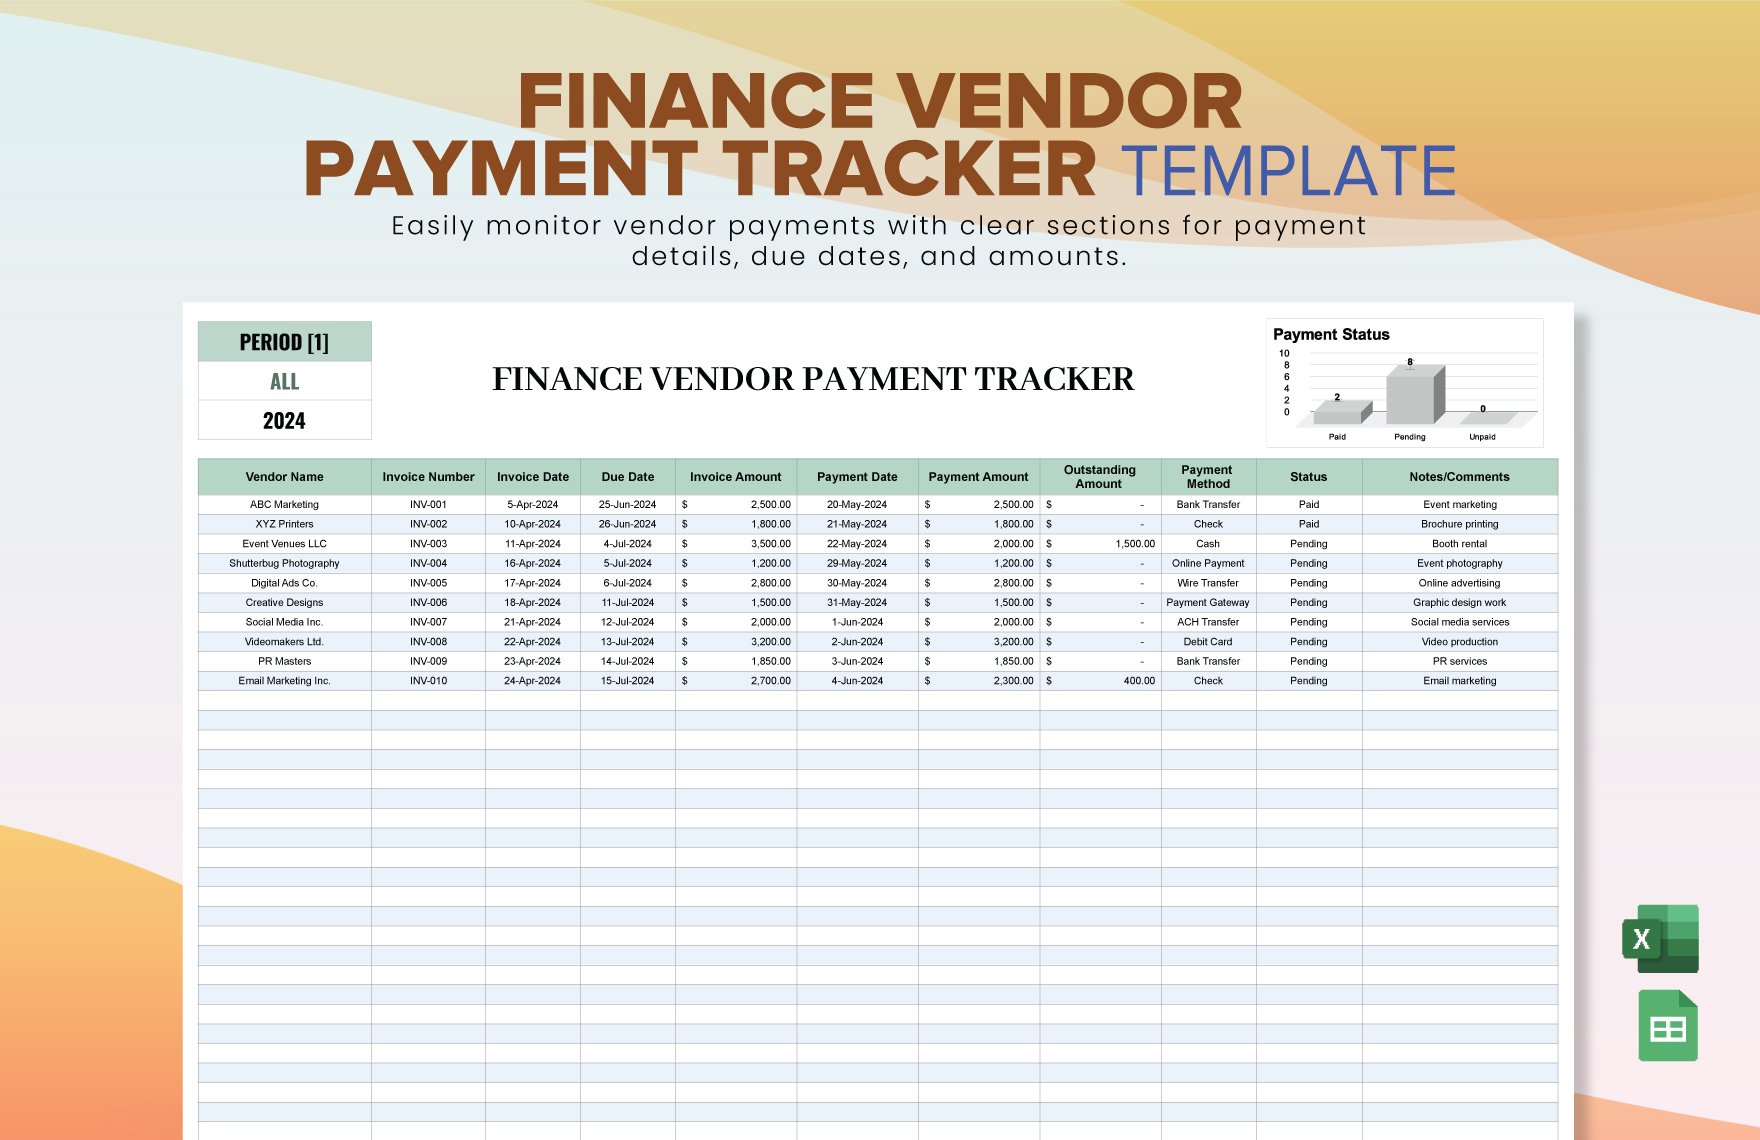 Finance Vendor Payment Tracker Template